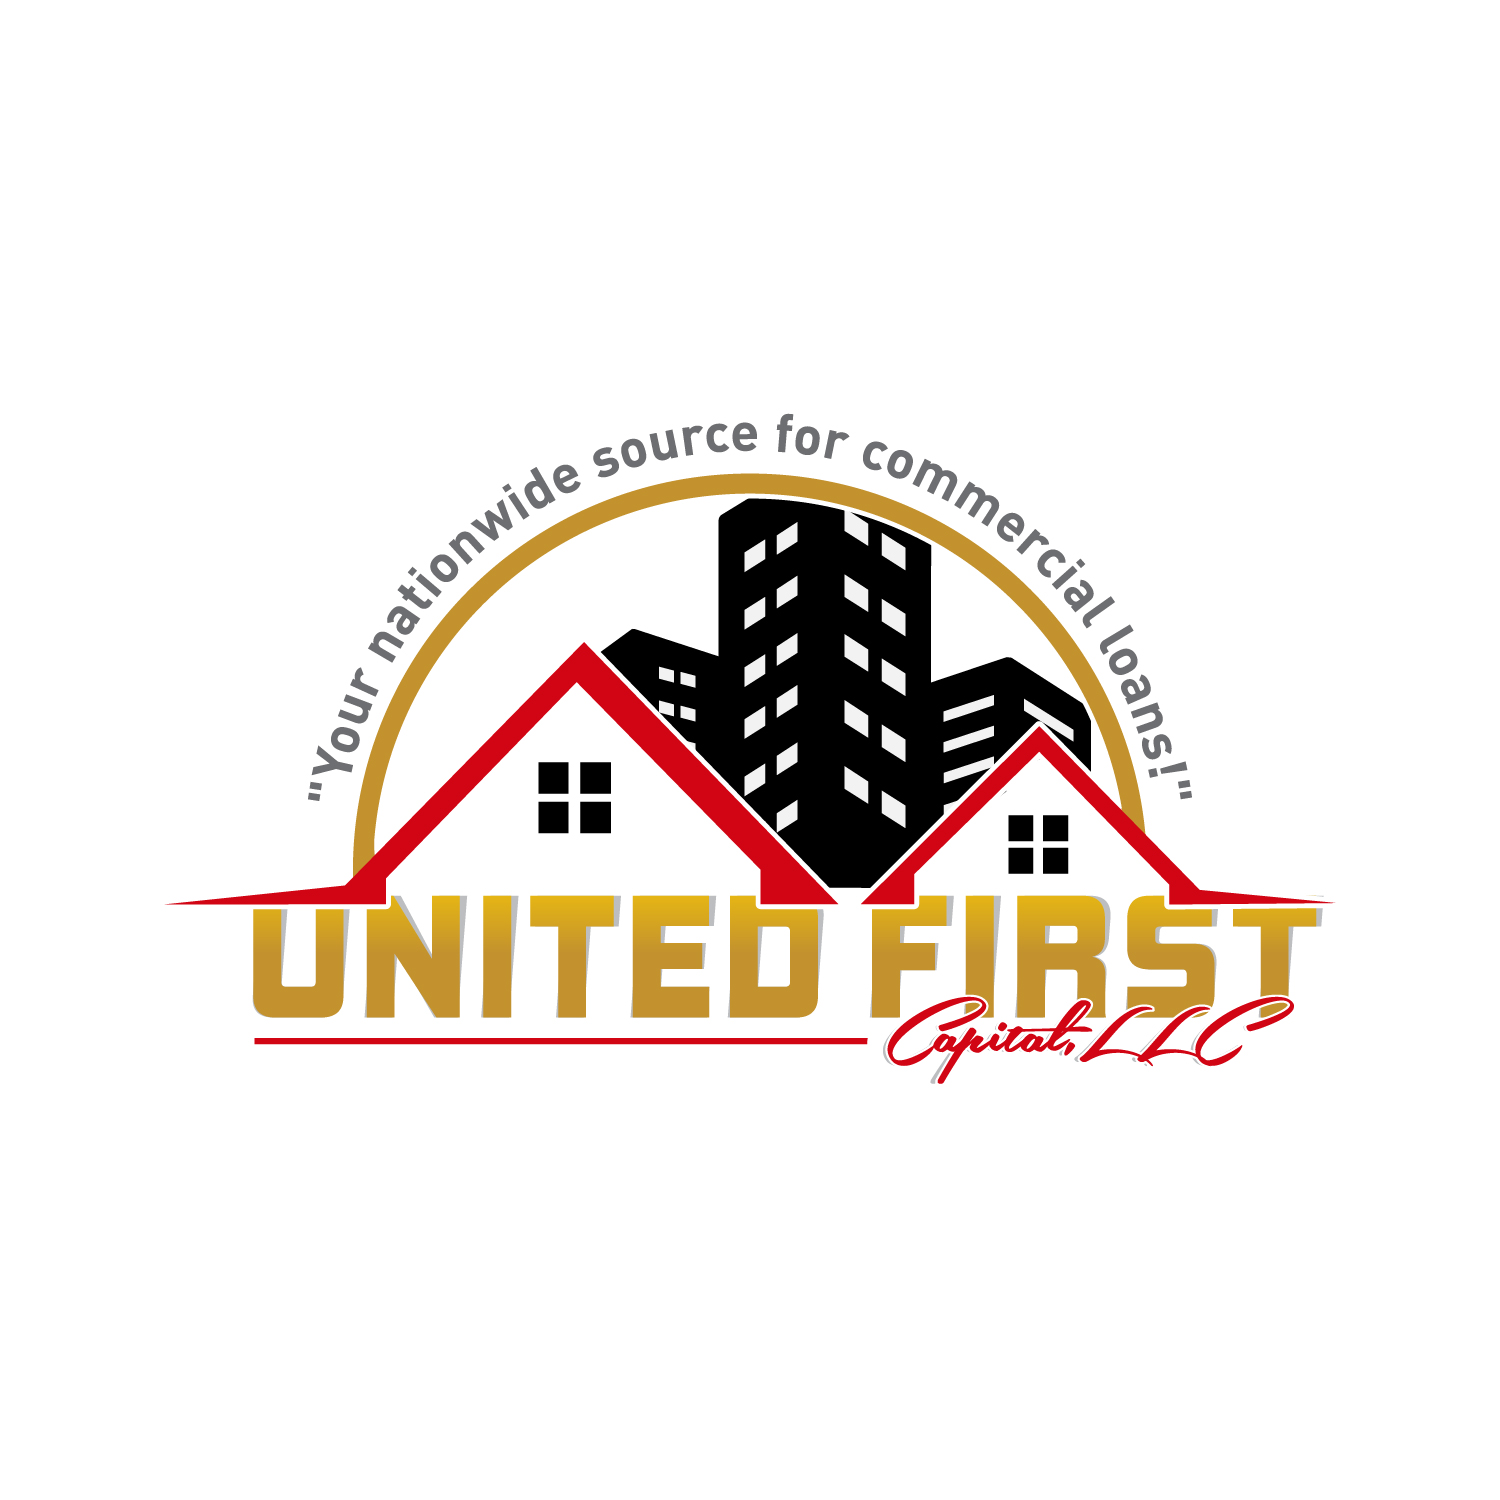 United First Capital LLC